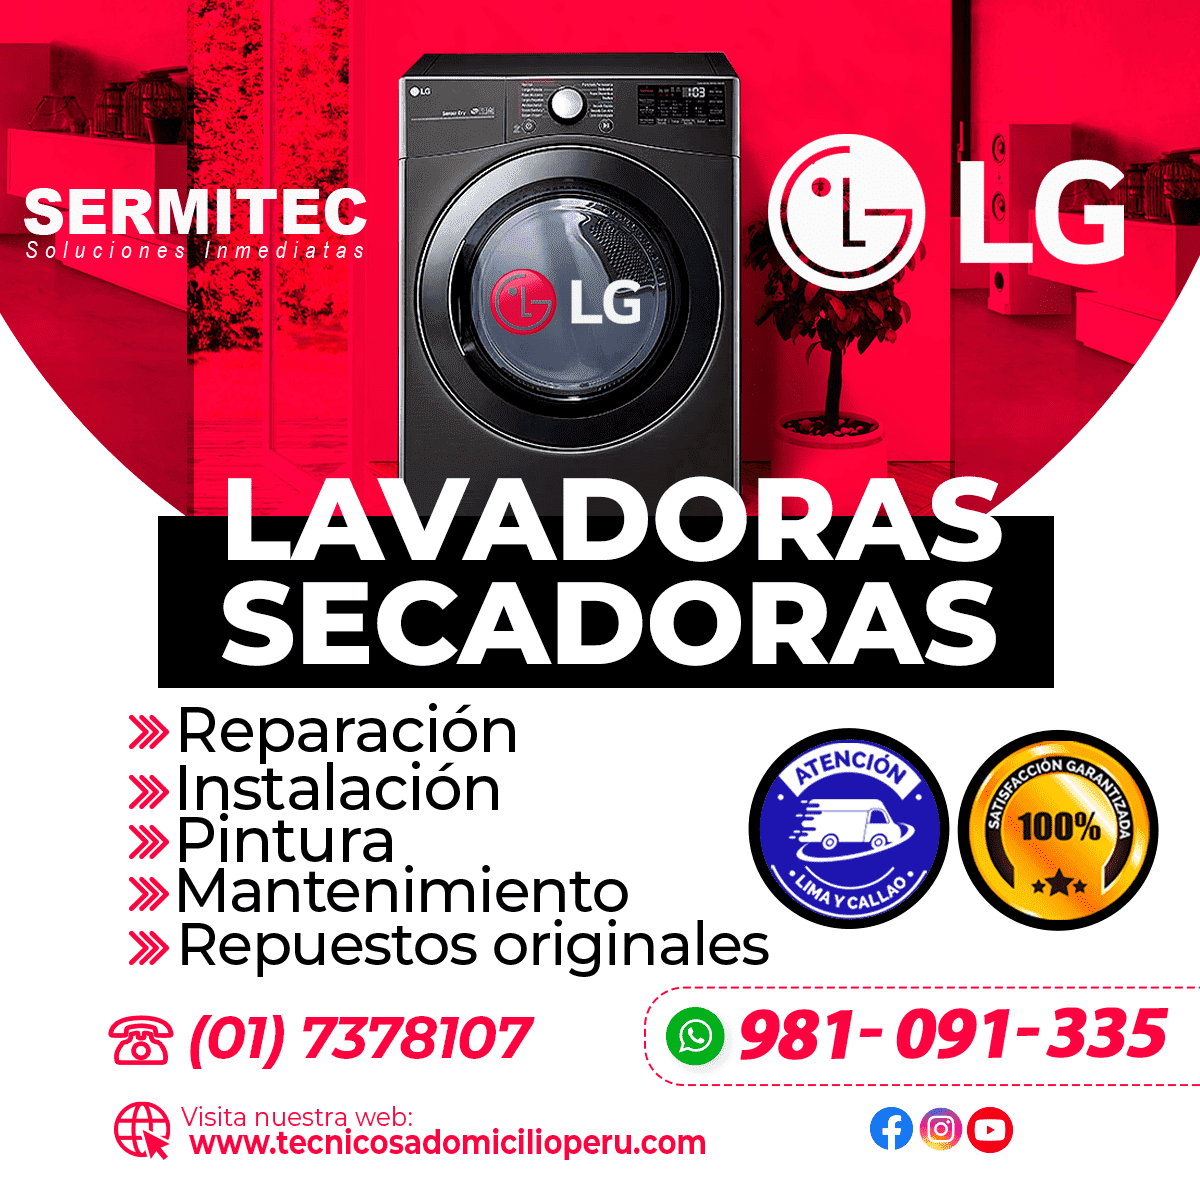 LG Reparacion de Lavadoras 981091335 LURIN